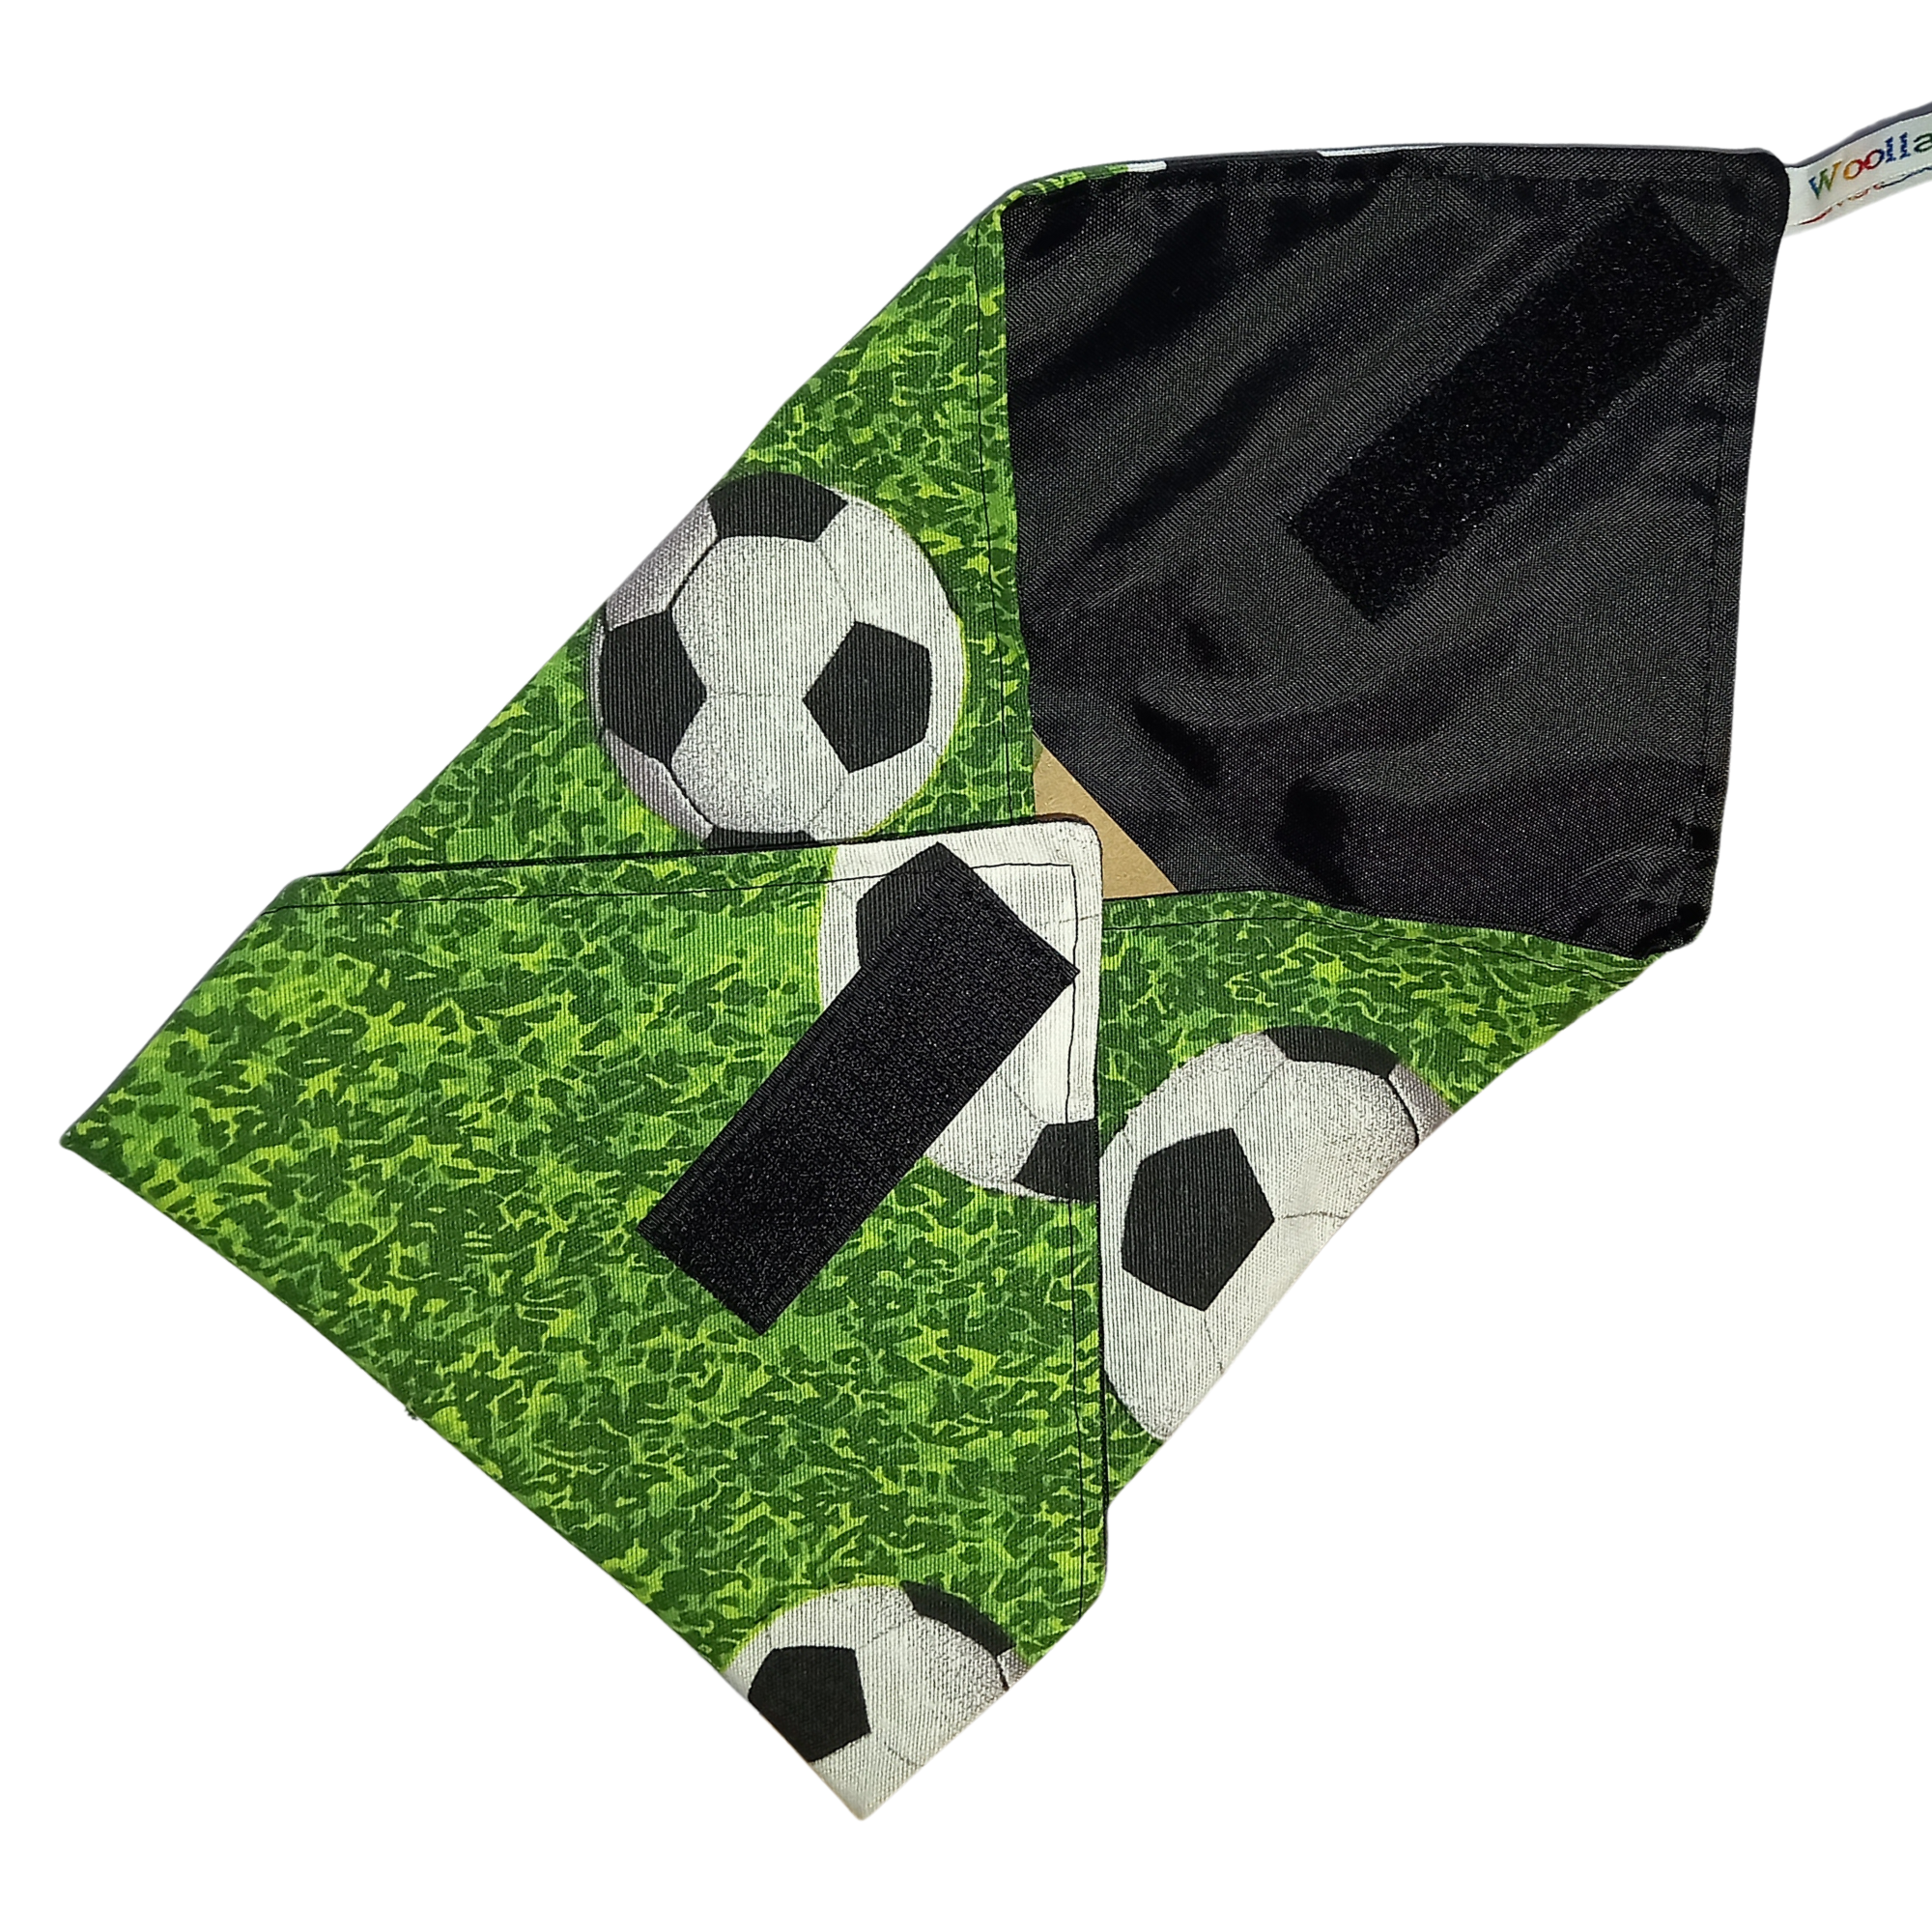 Washable Reusable Sandwich Wrap  - Vegan - Footballs Soccer on Grass